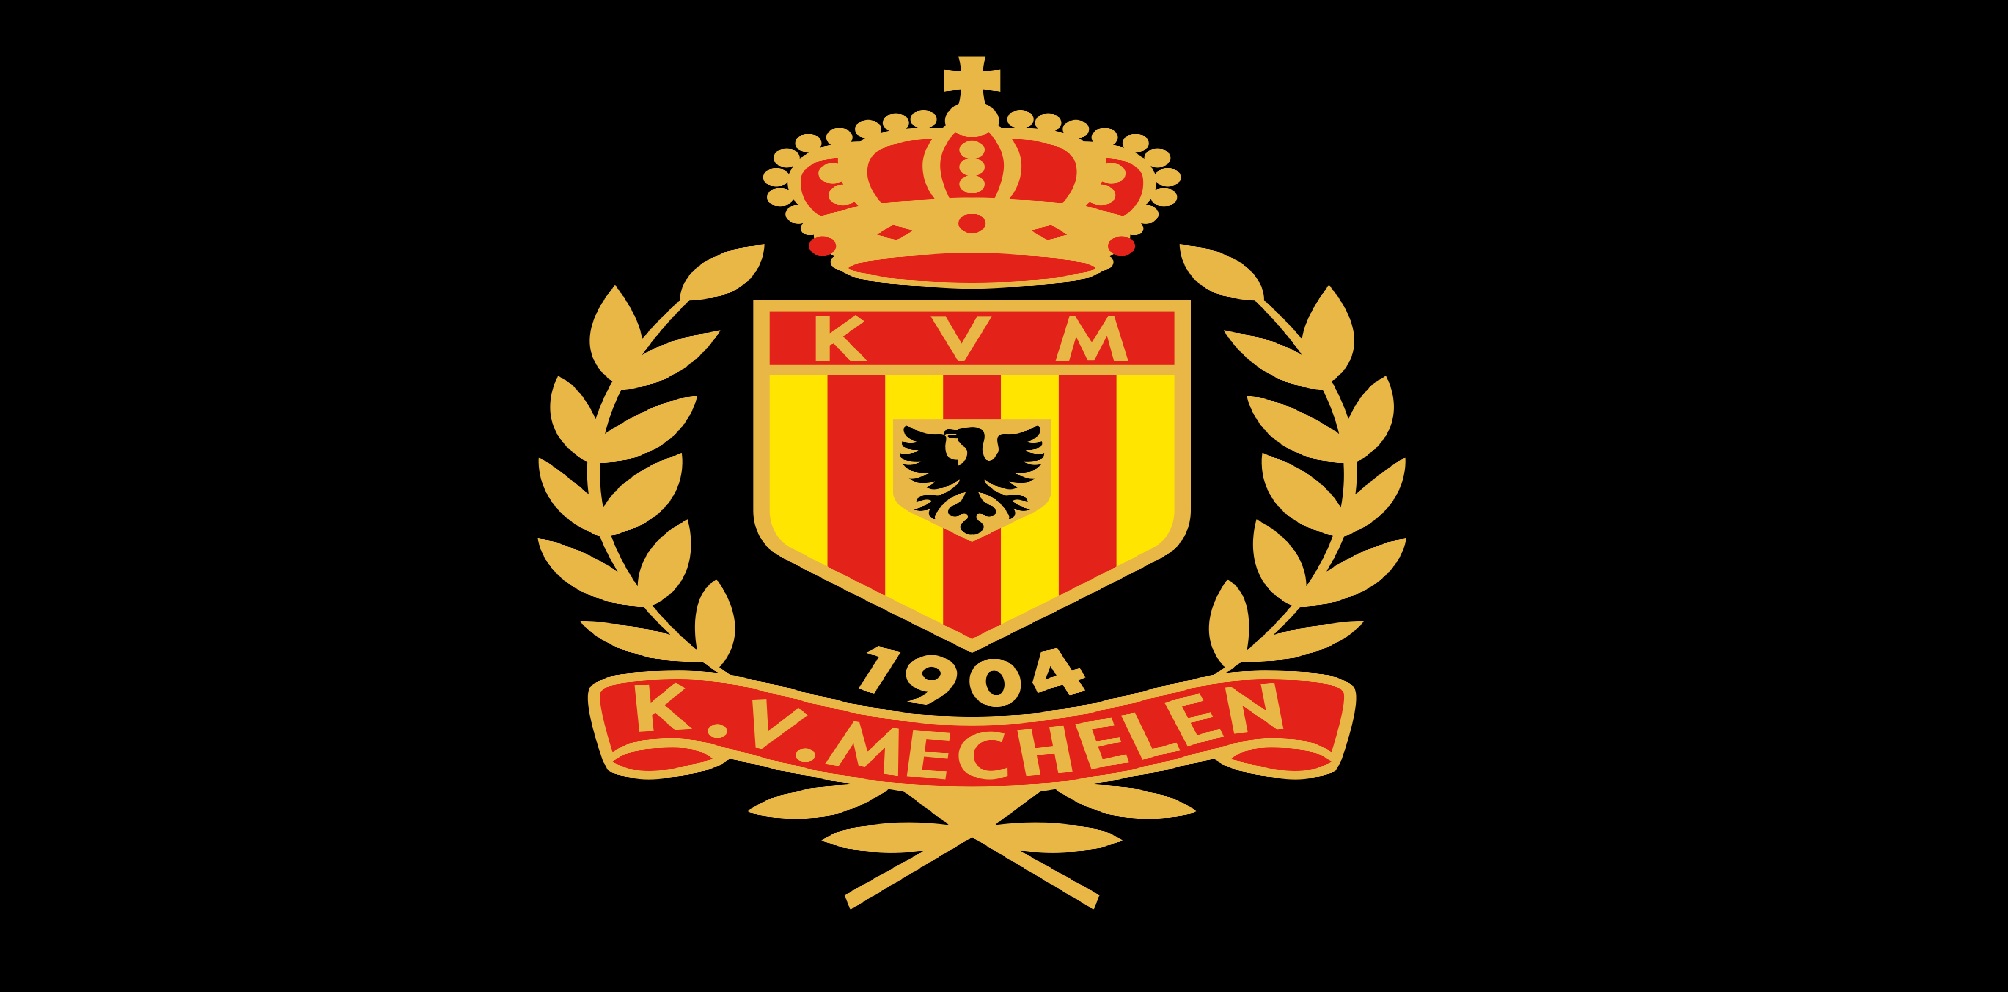 k-v-mechelen-13-football-club-facts